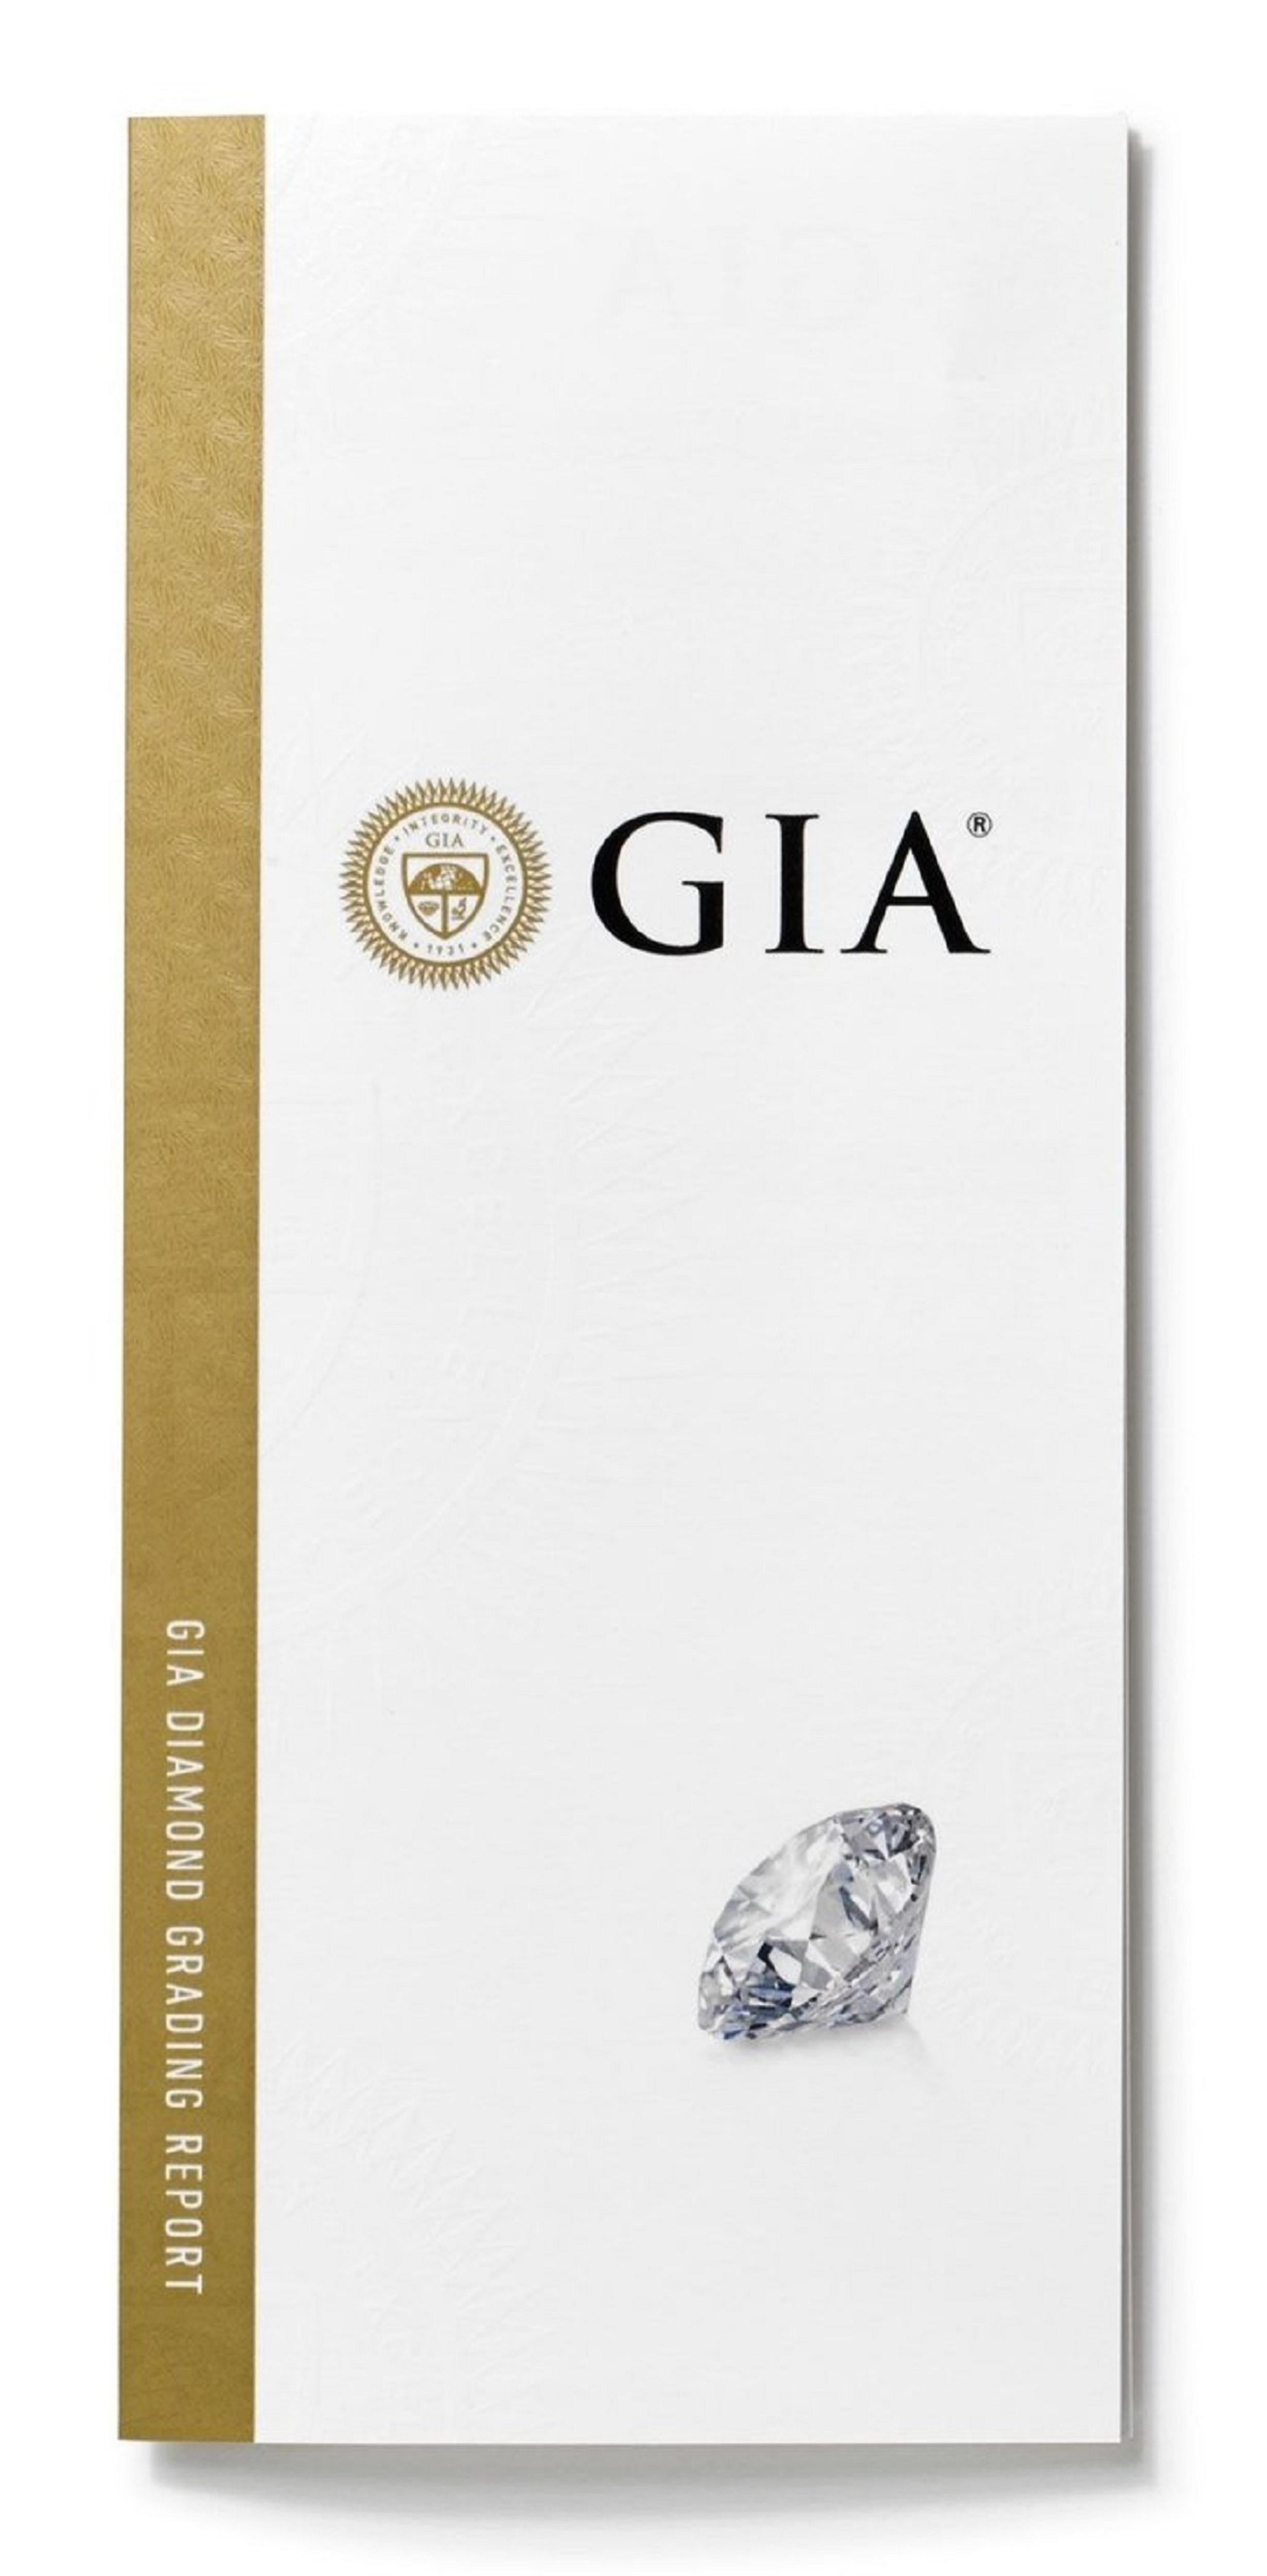 Charming 18k White Gold Three Stone Ring 1.43ct Natural Diamonds GIA Certificate 6